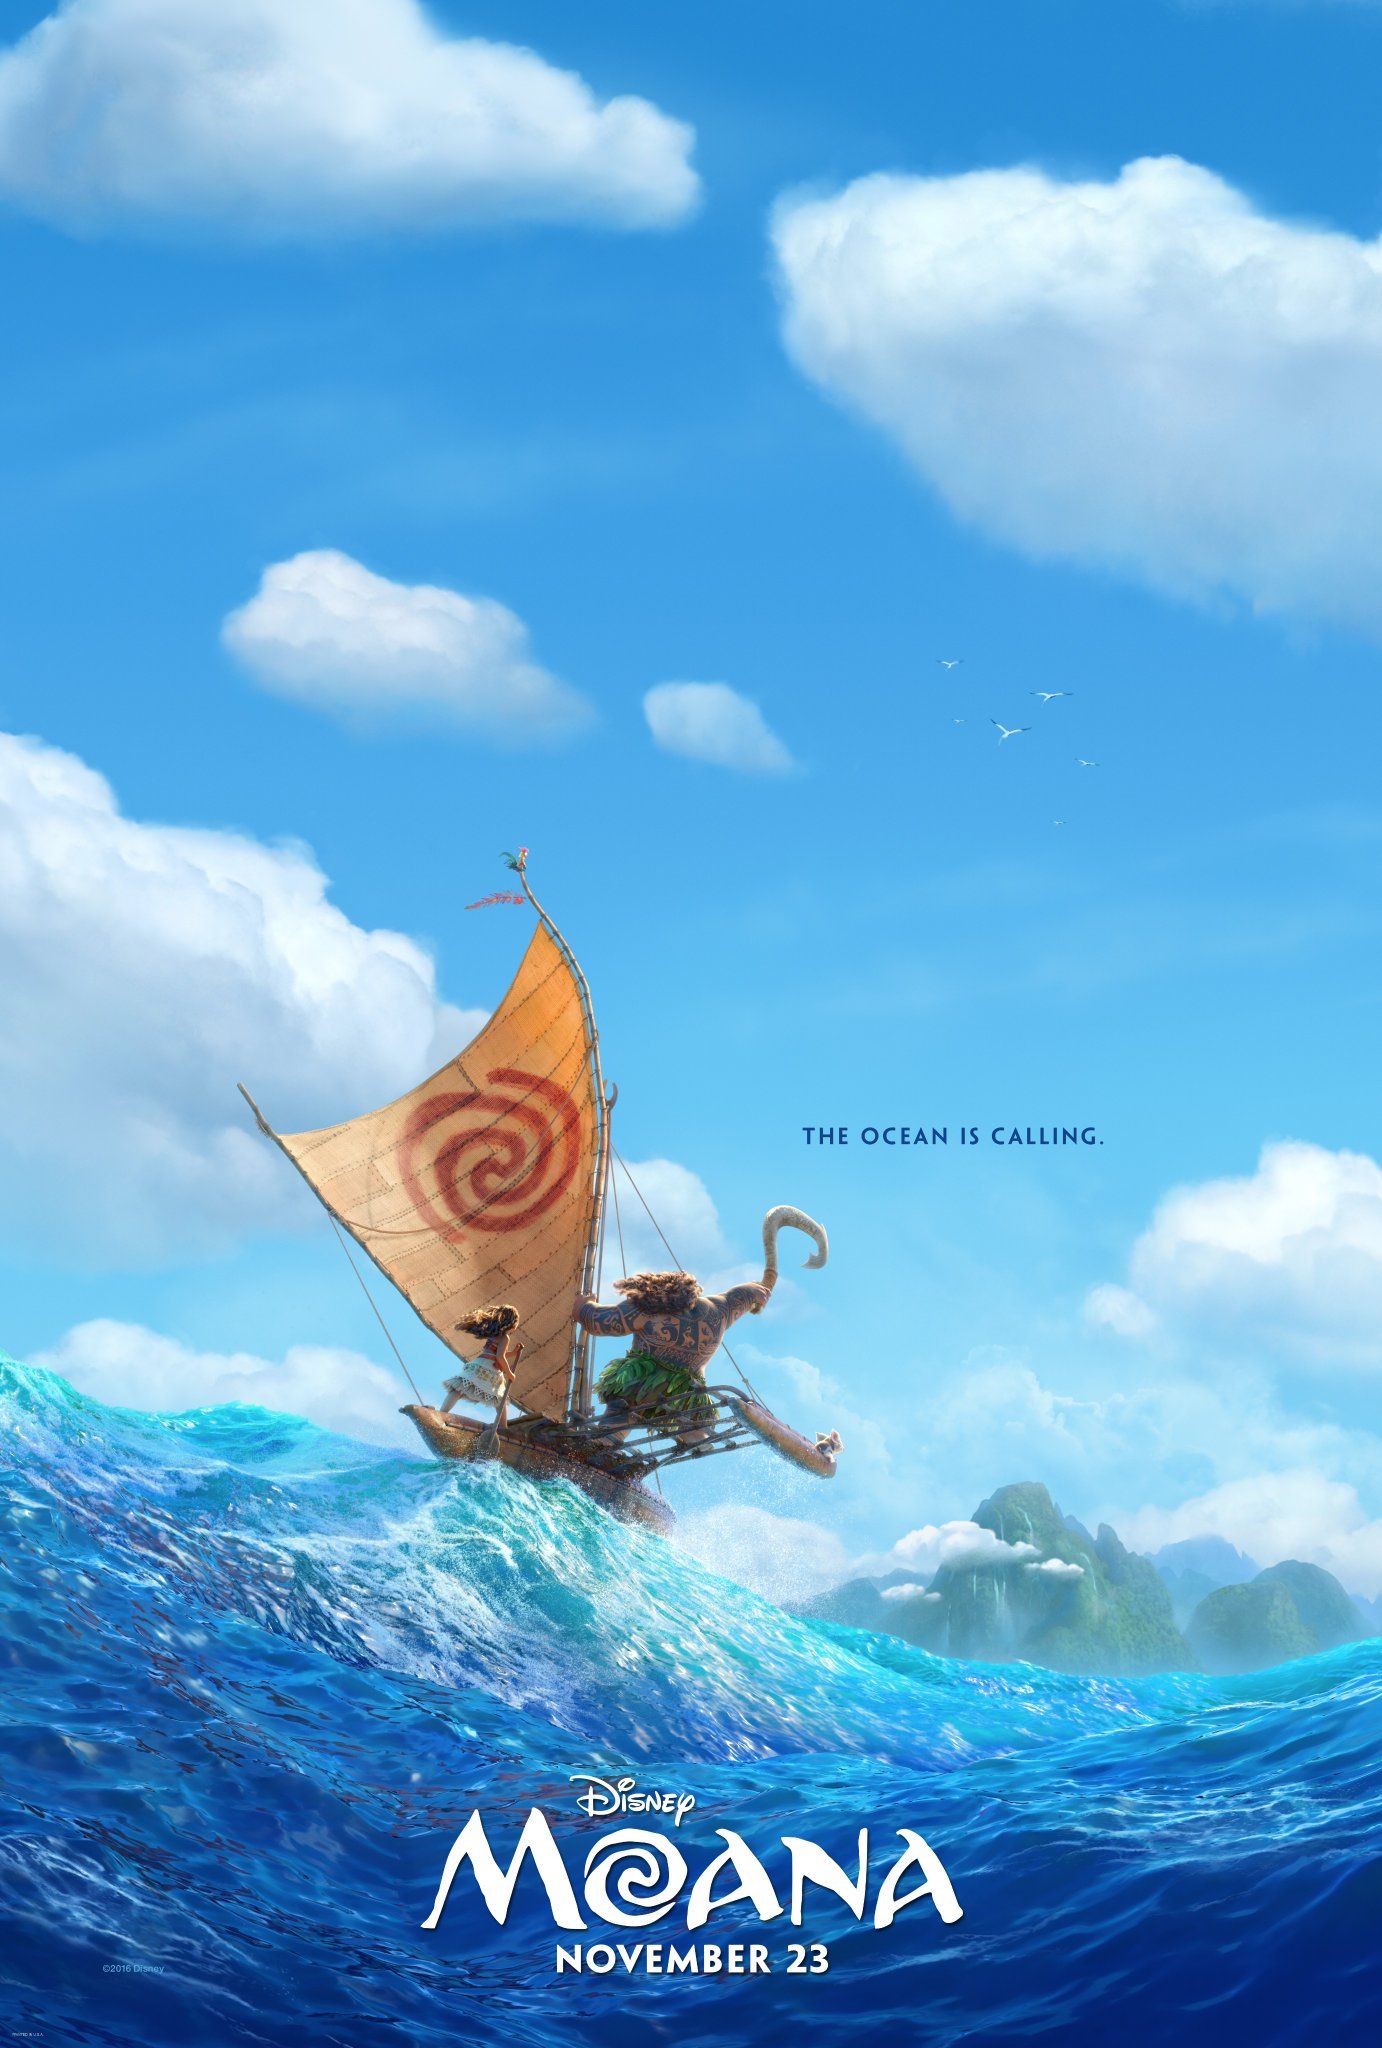 Moana Teaser Trailer: Disney’s Sea Voyage Adventure Begins